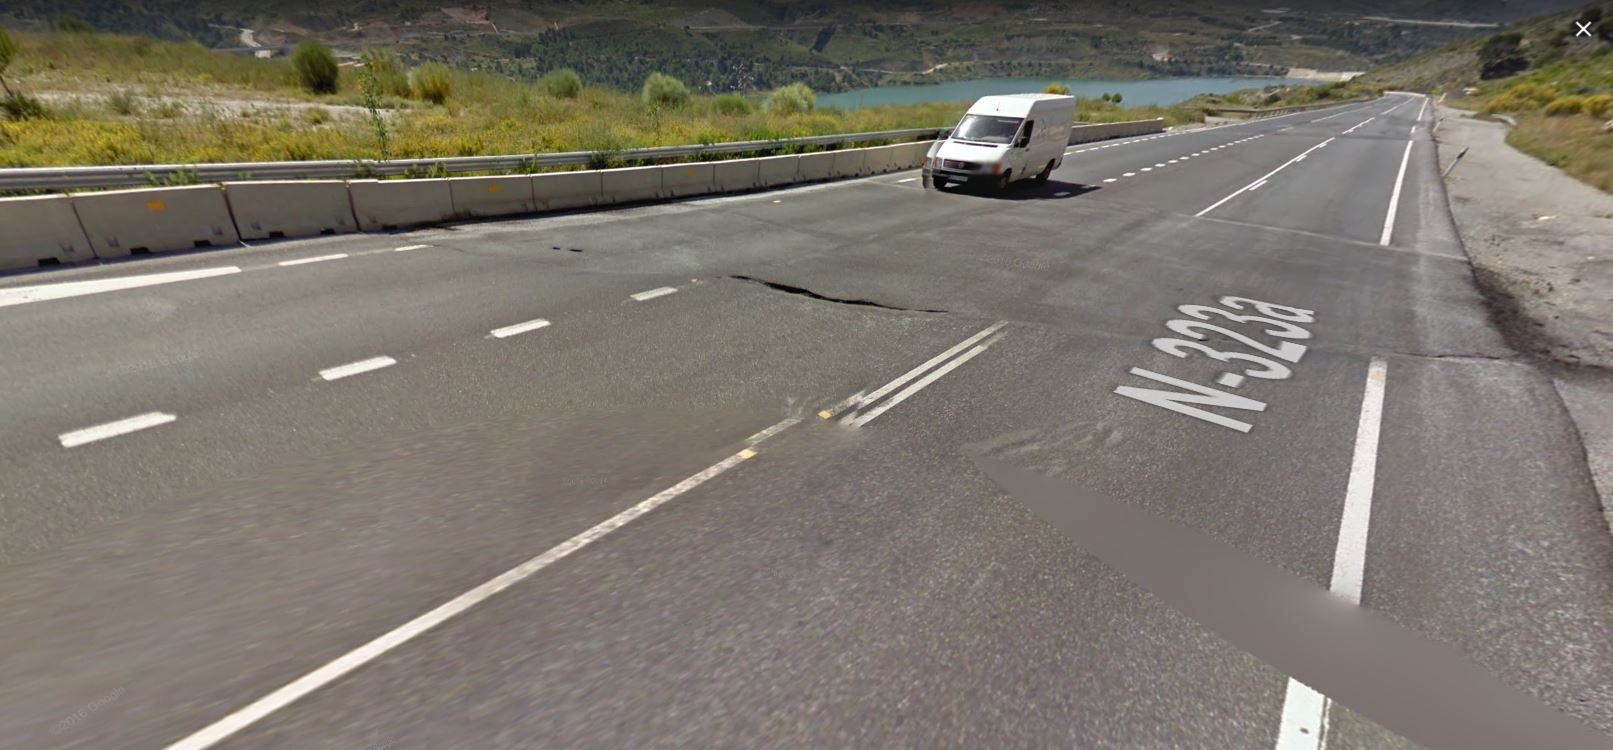 May 2011 Google Street View image of the lateral margin of the El Arrecife Landslide in Spain.